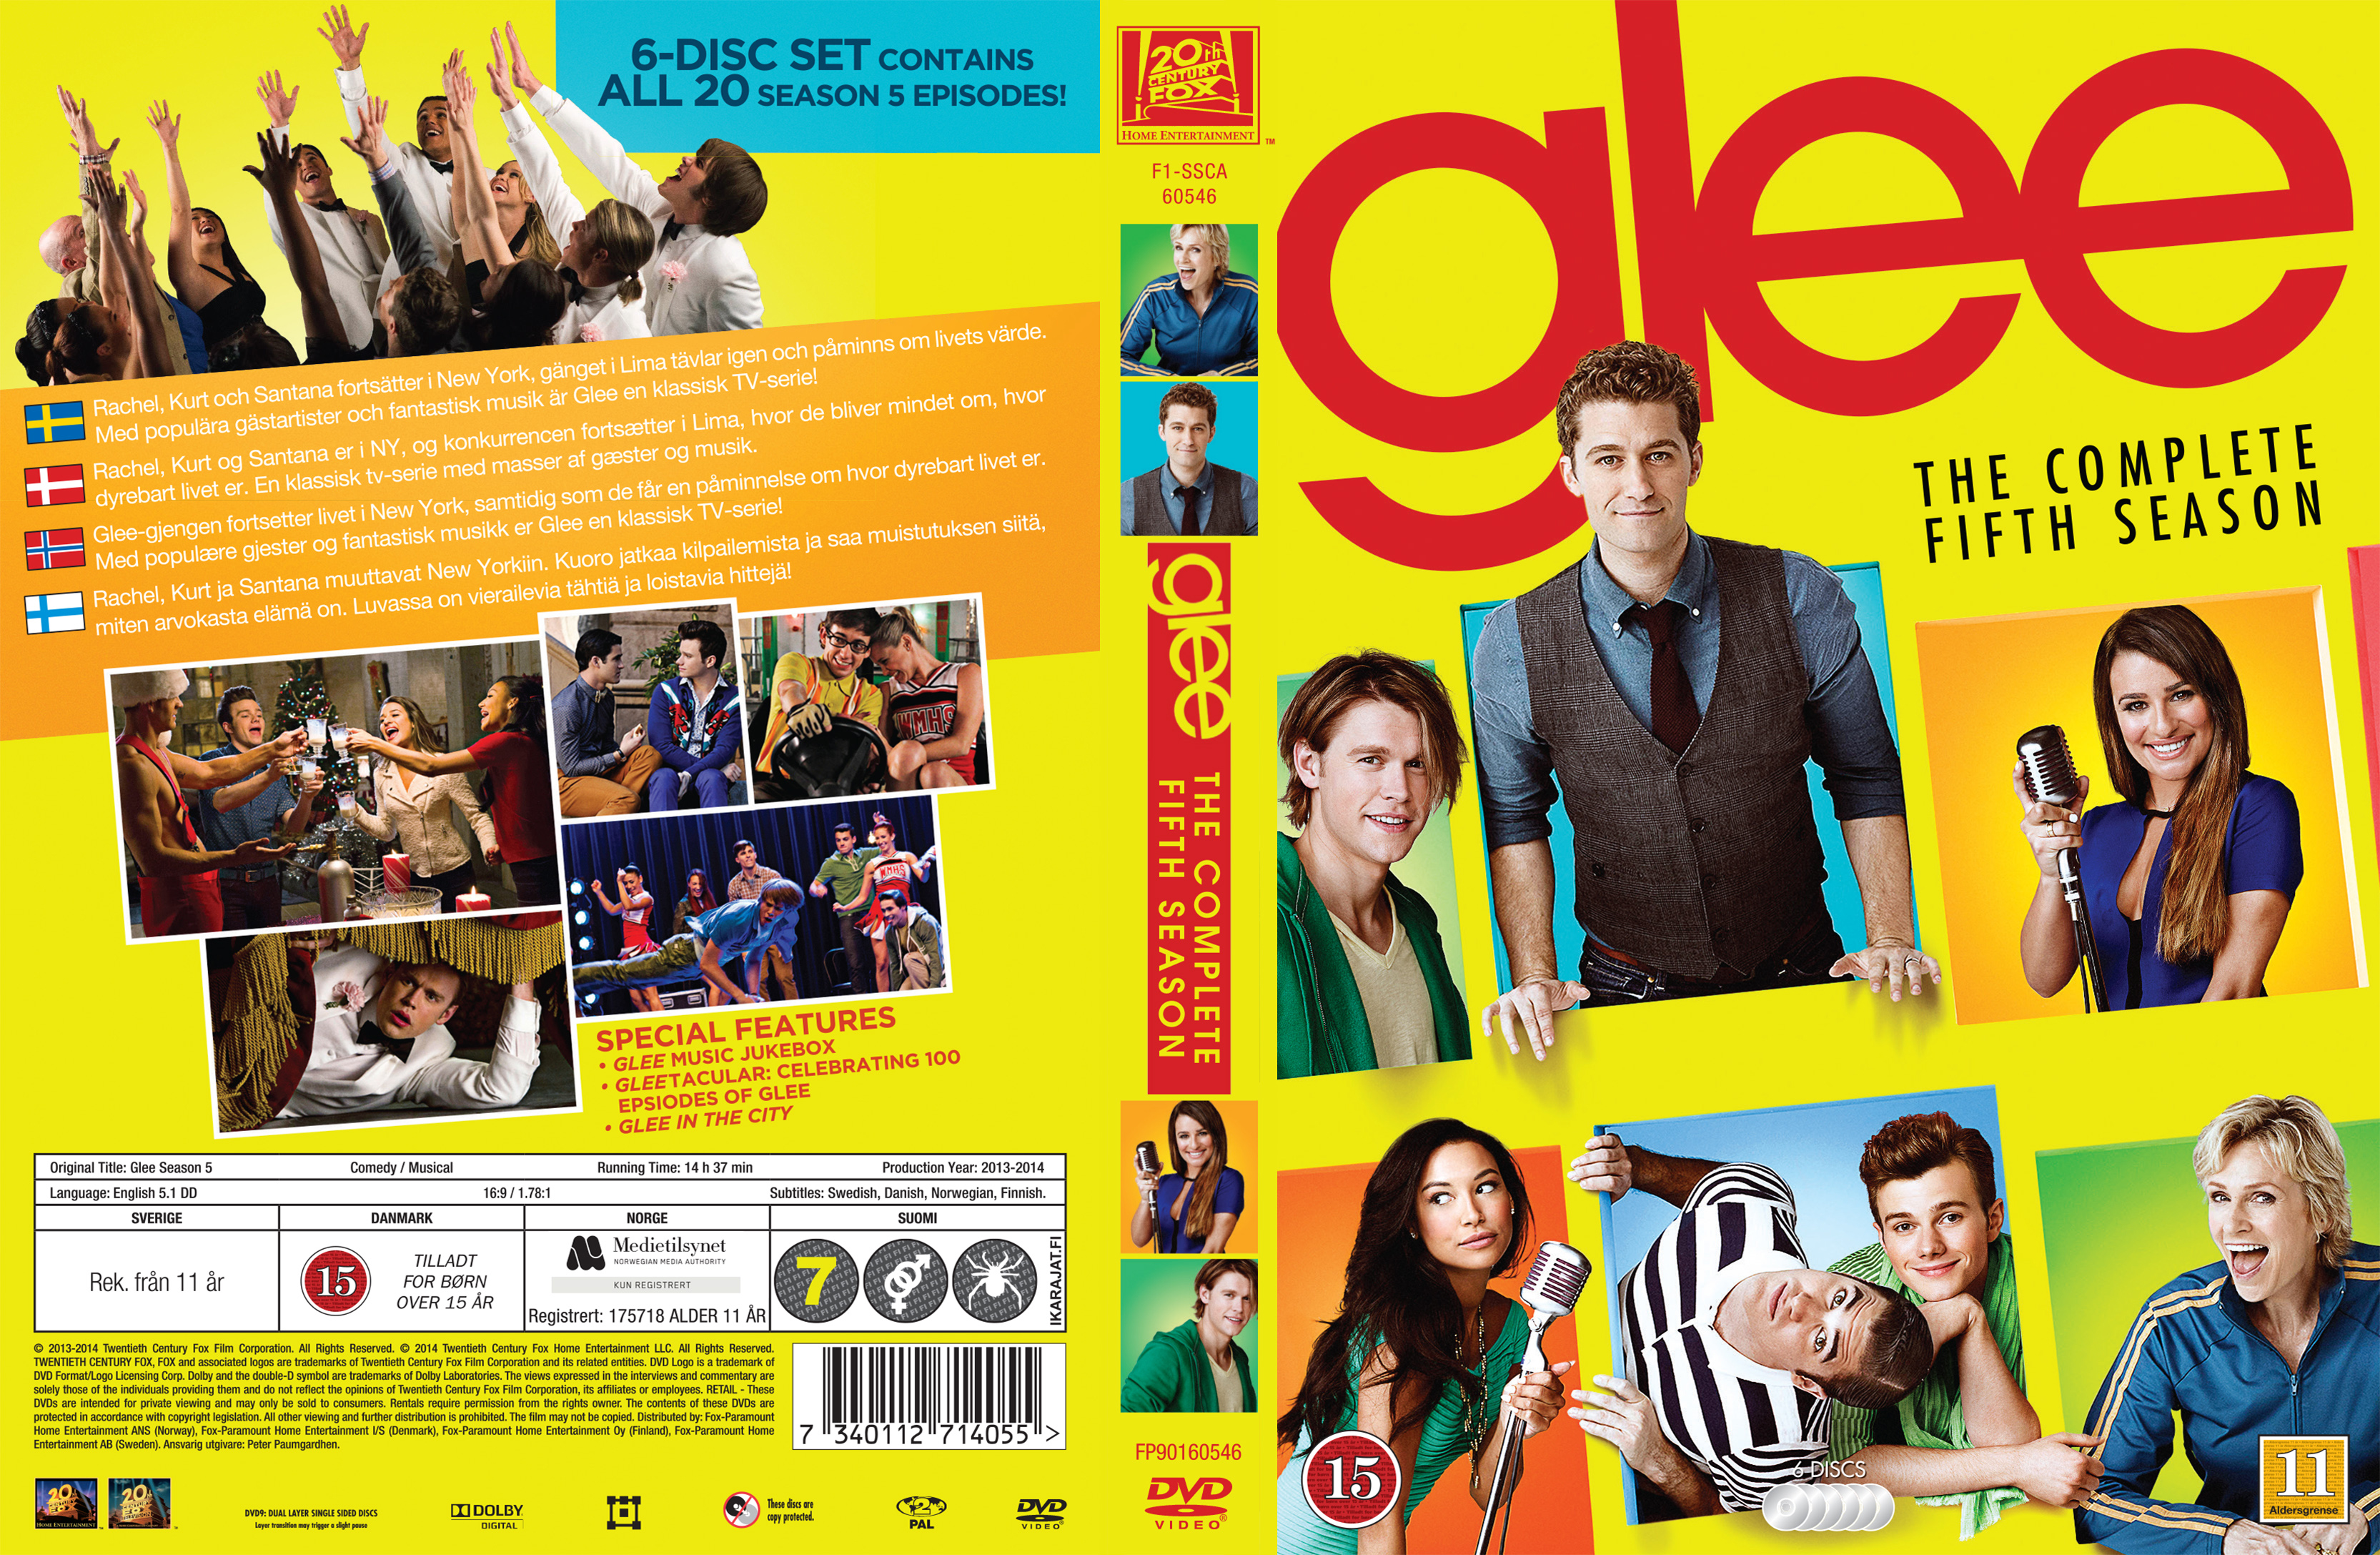 glee season 5 cover art